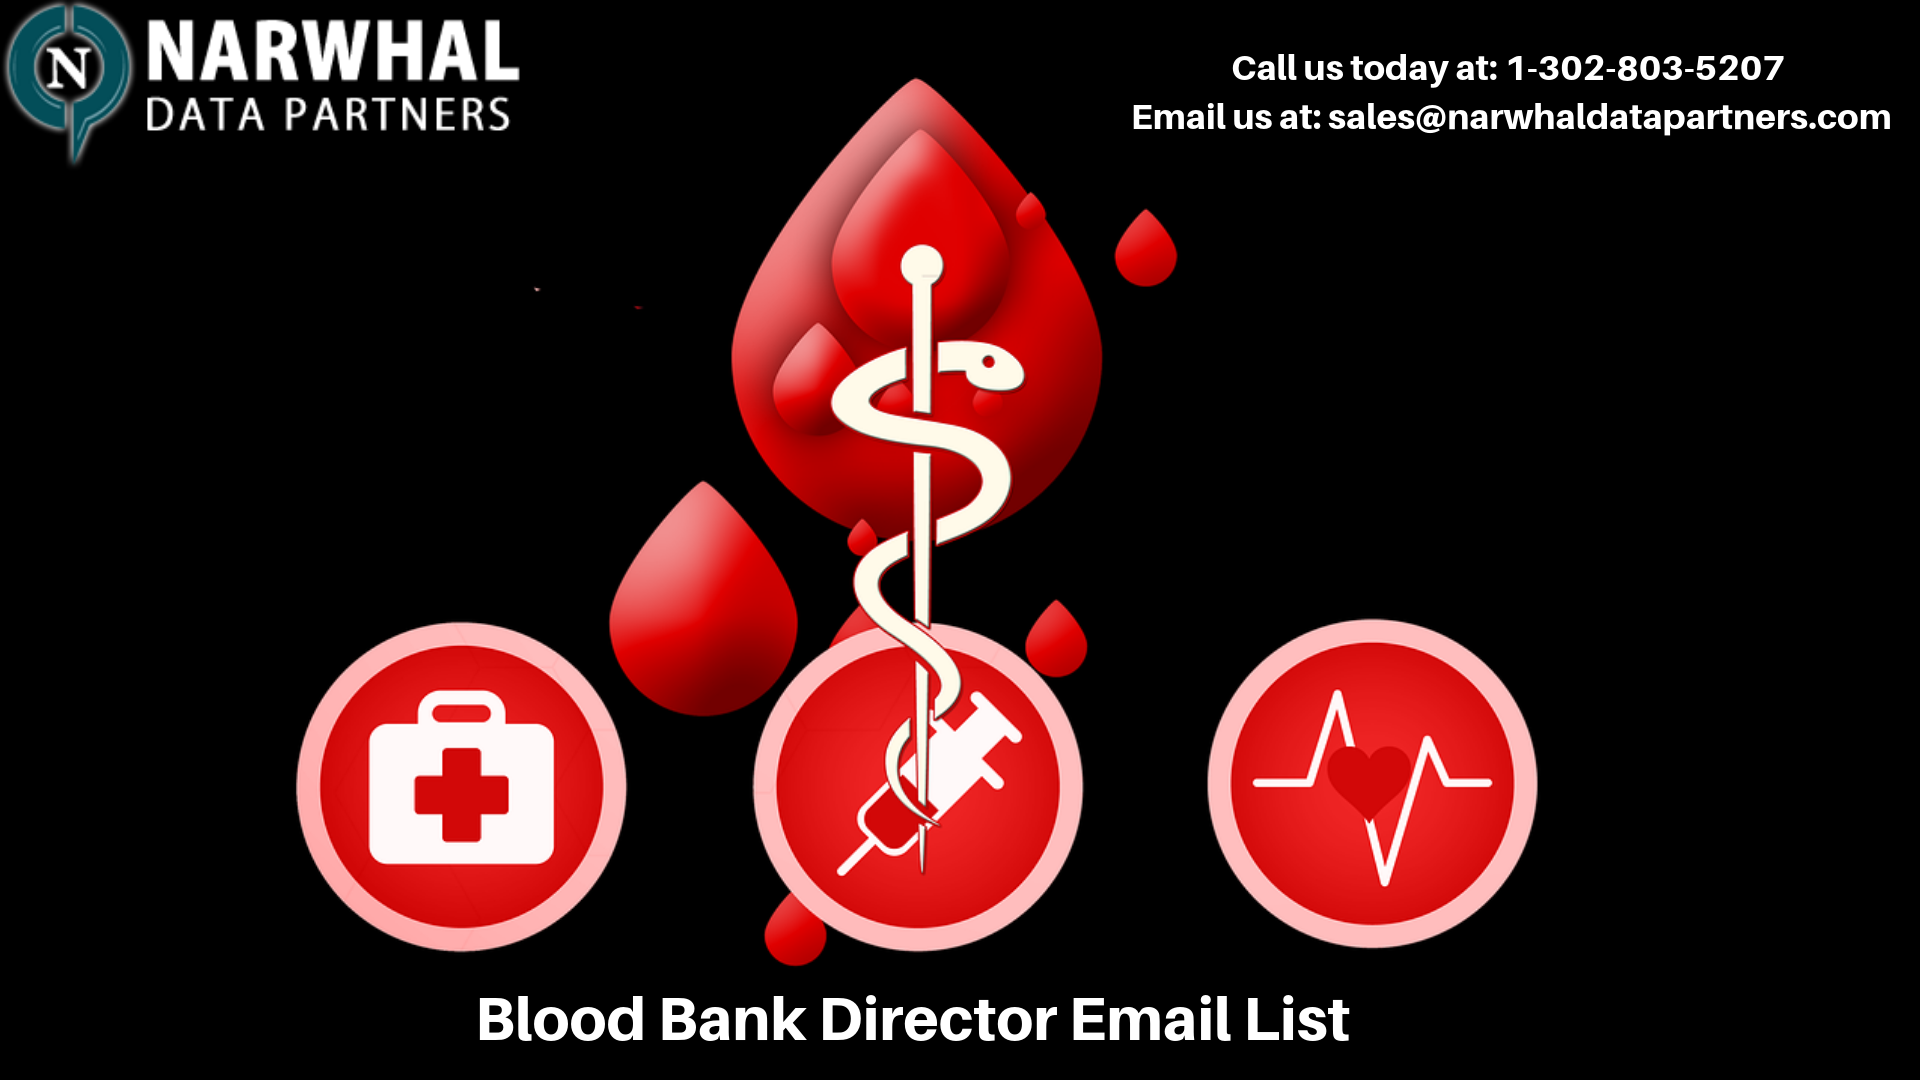 http://narwhaldatapartners.com/blood-bank-director-email-list.html